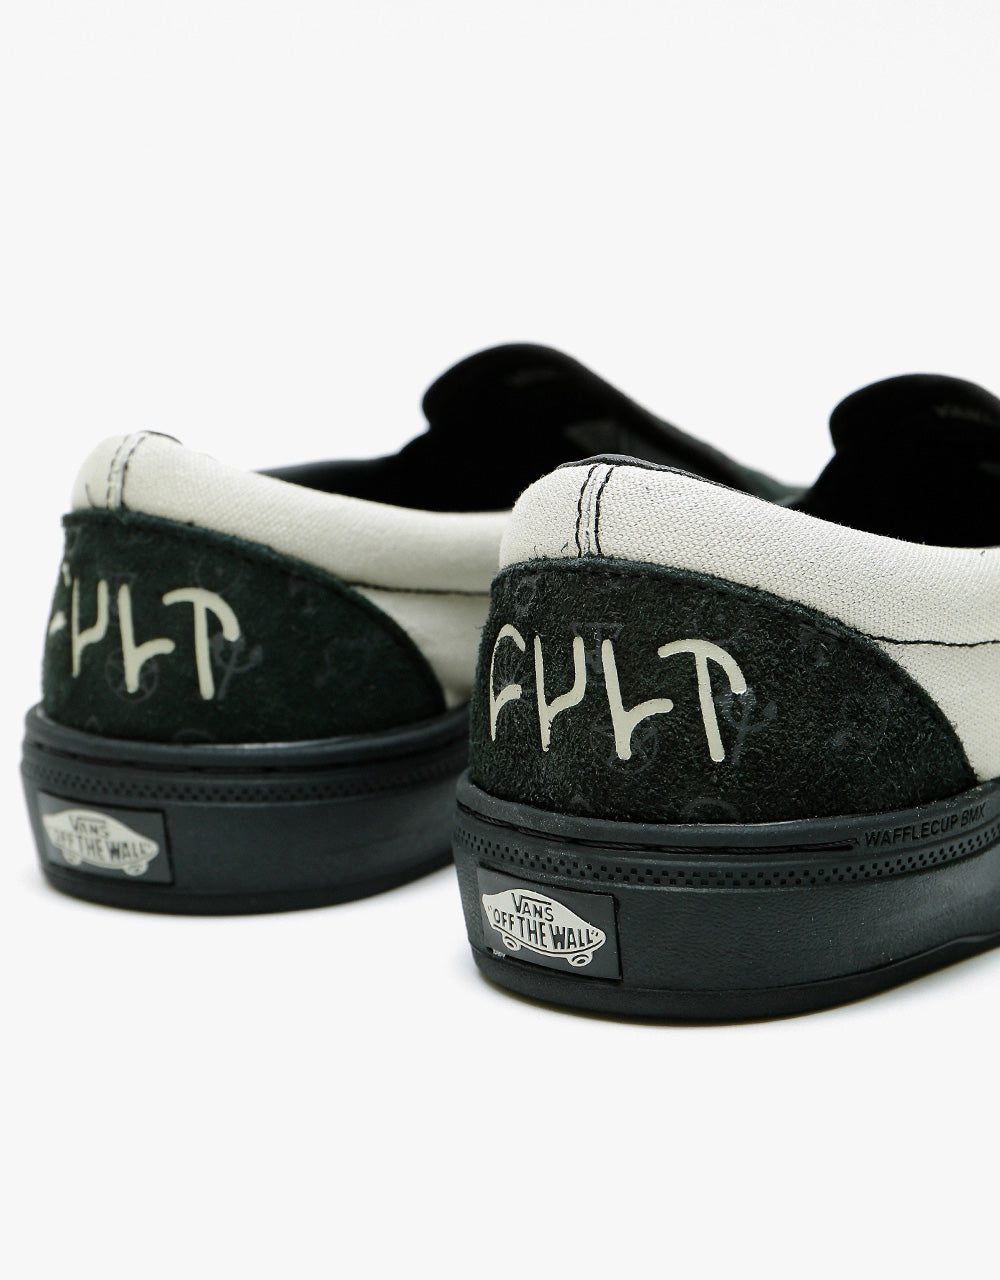 Vans BMX Slip-On Shoes - (Cult) Black/Grey